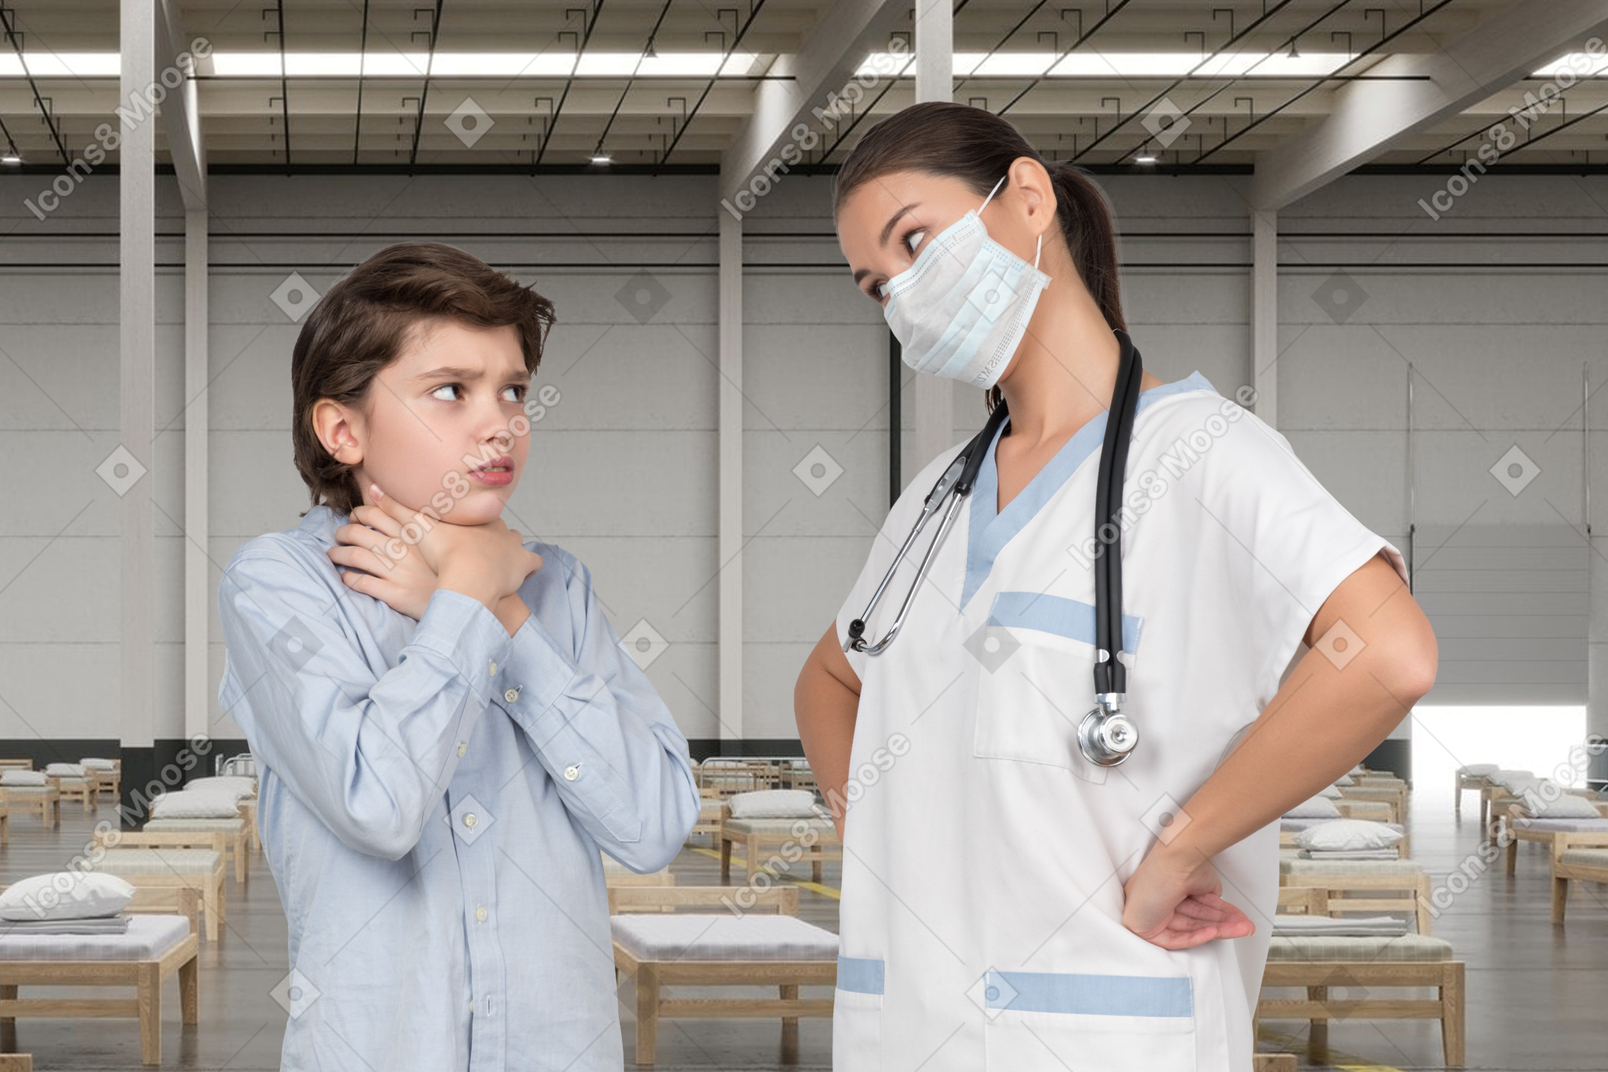 Boy shows a nurse that his throat hurts